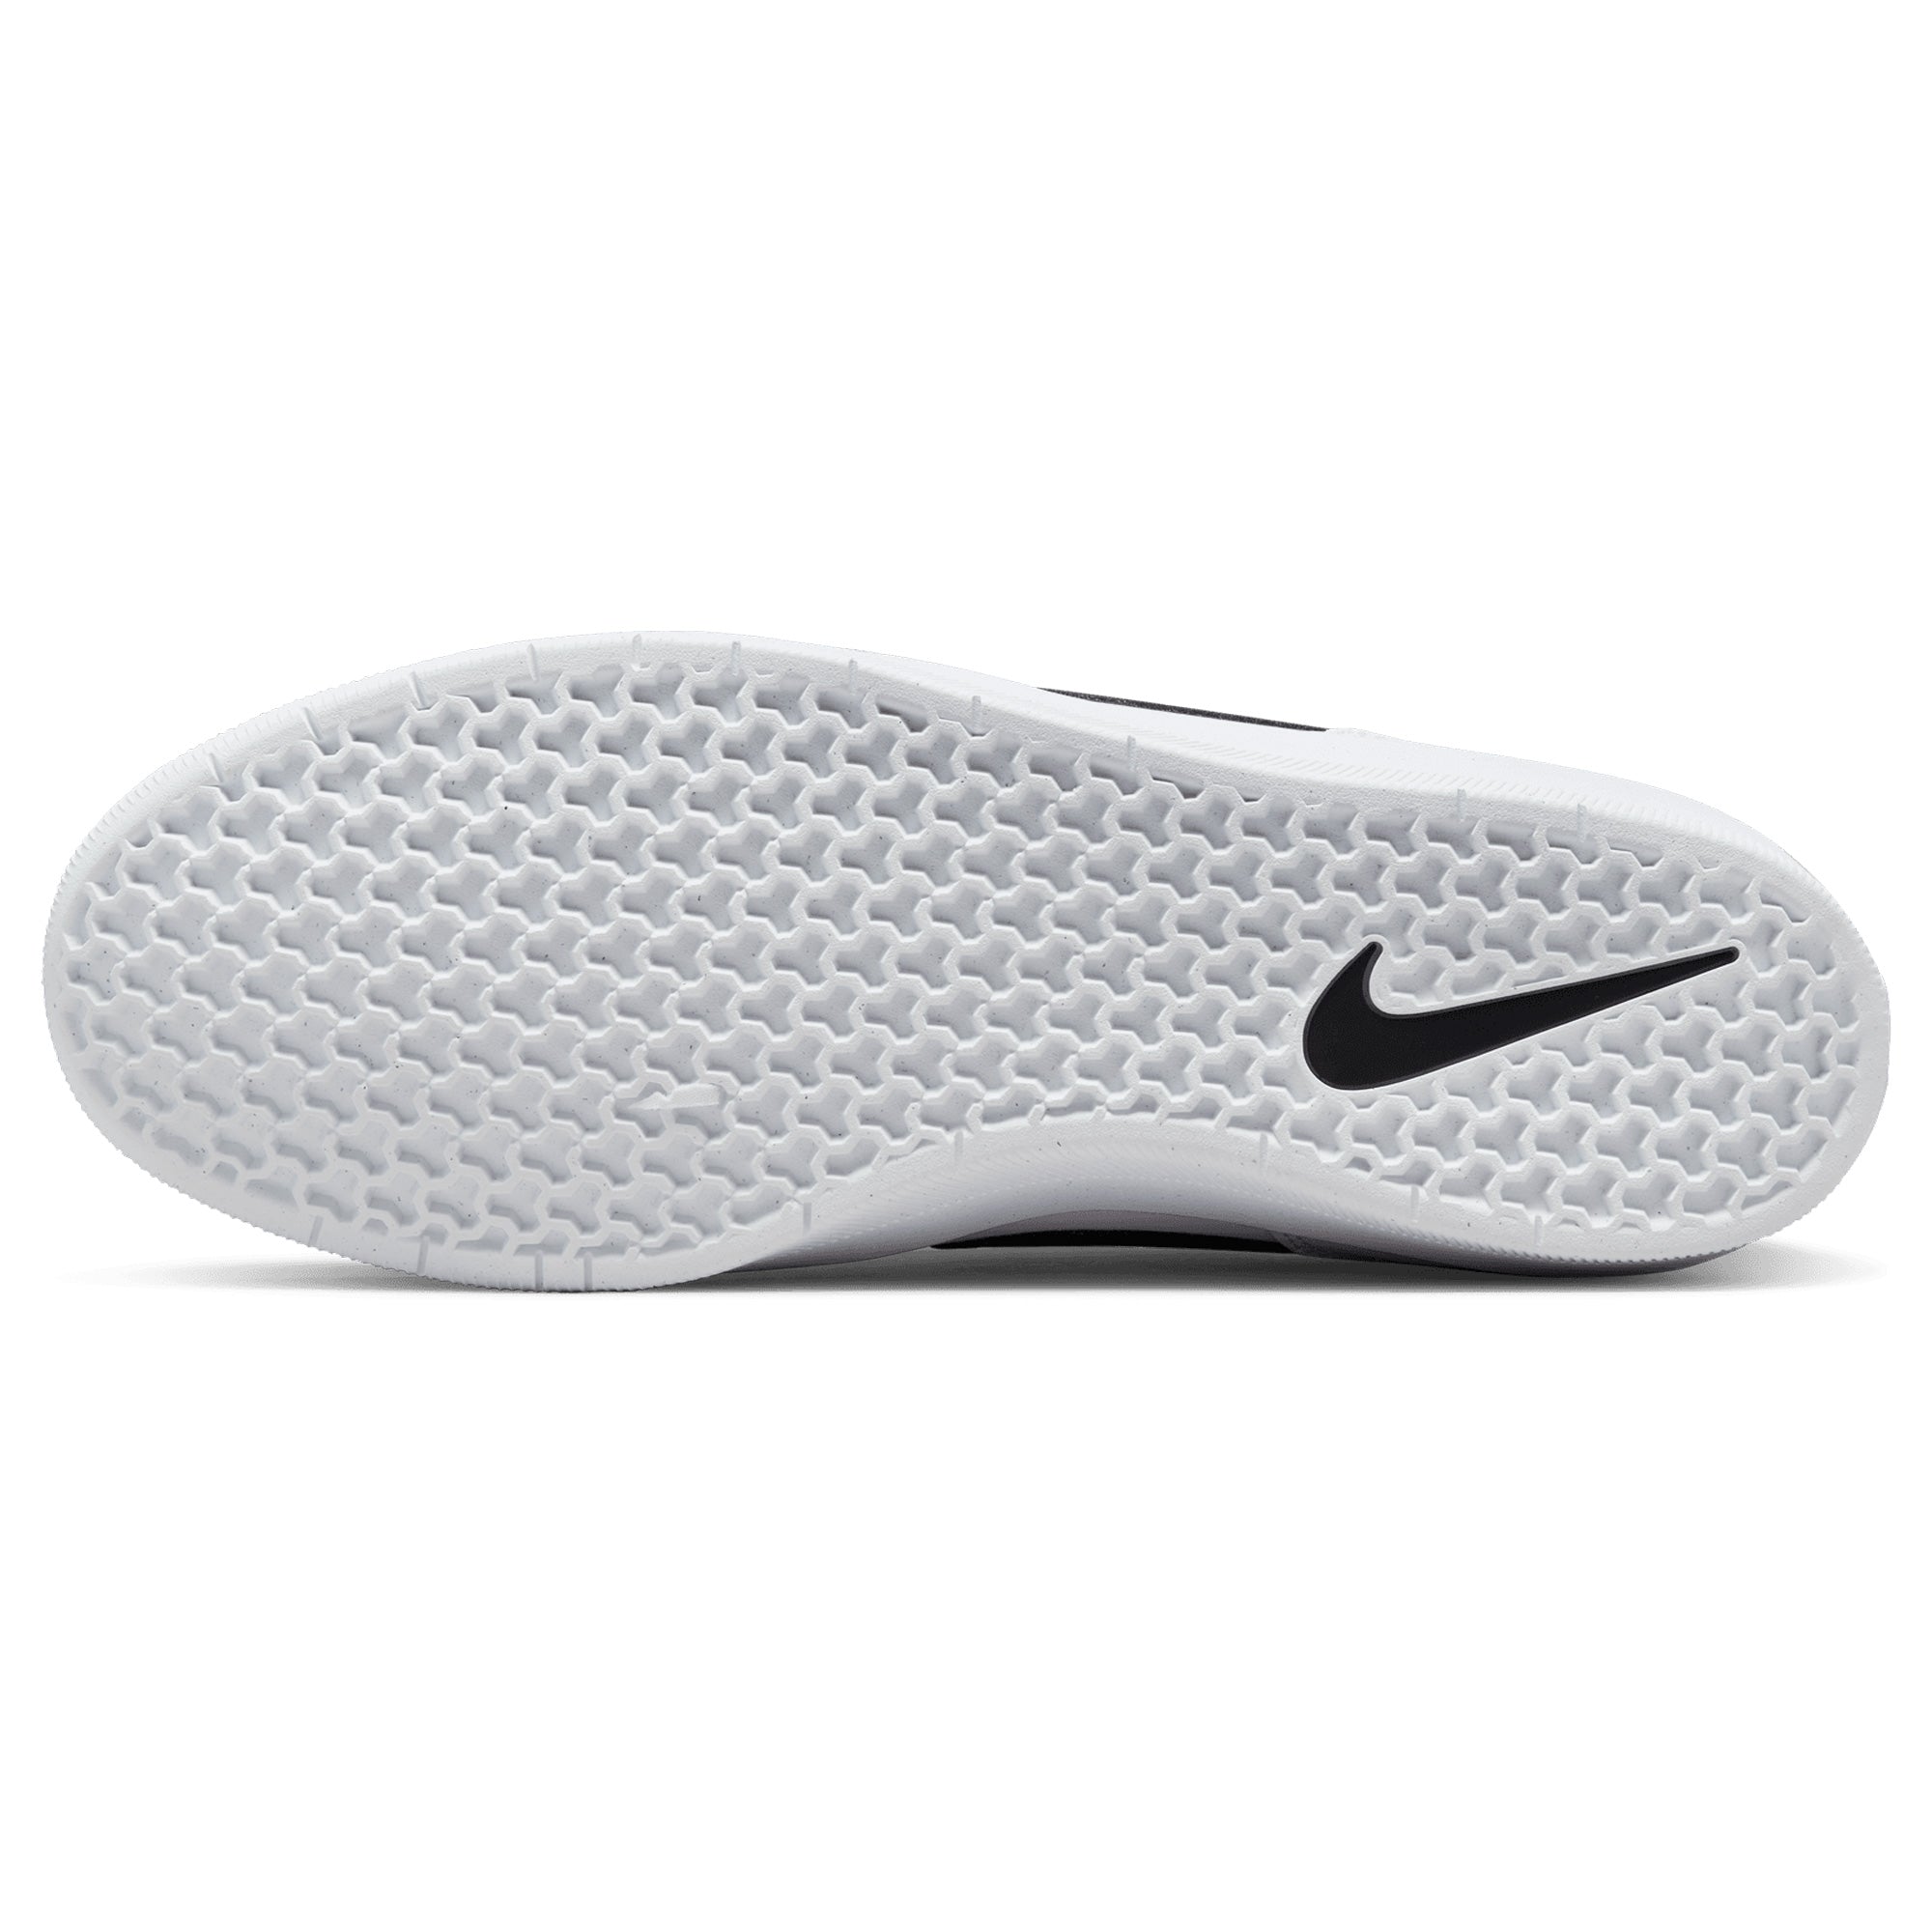 Nike SB Force 58 Premium Shoes - White/Black-White